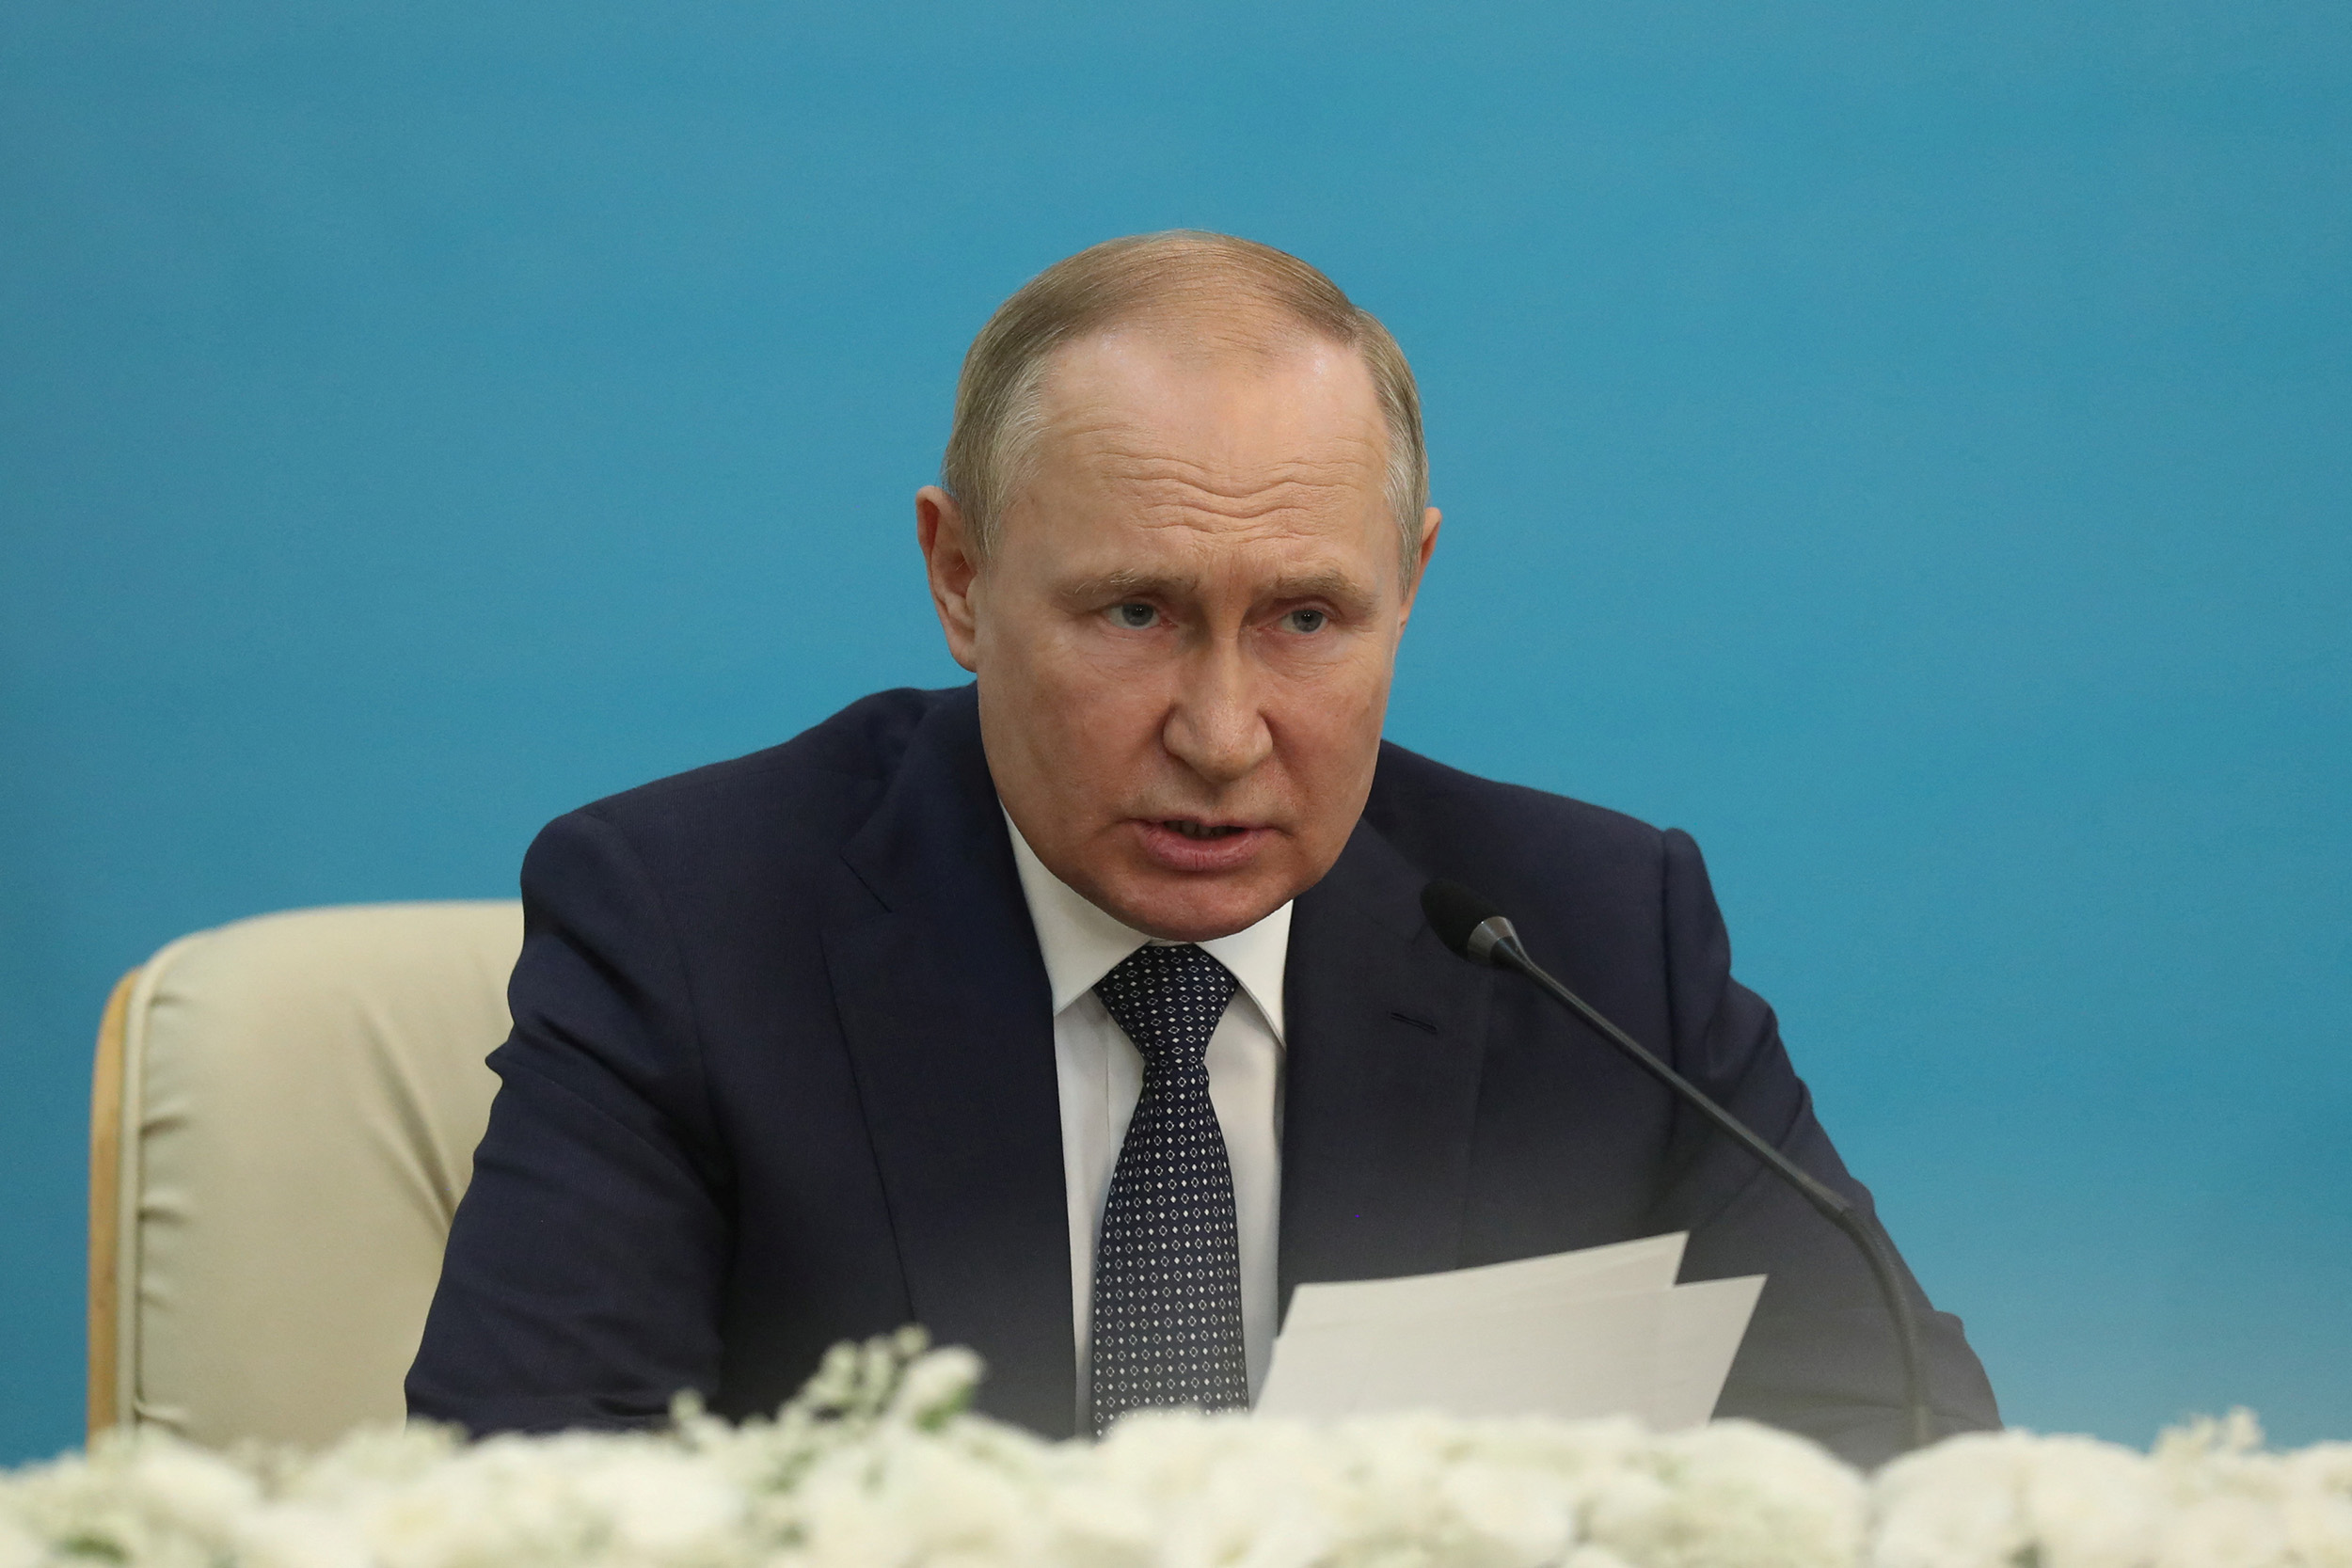 Russian President Vladimir Putin attends a news conference following the Astana Process summit in Tehran, Iran, on July 19.